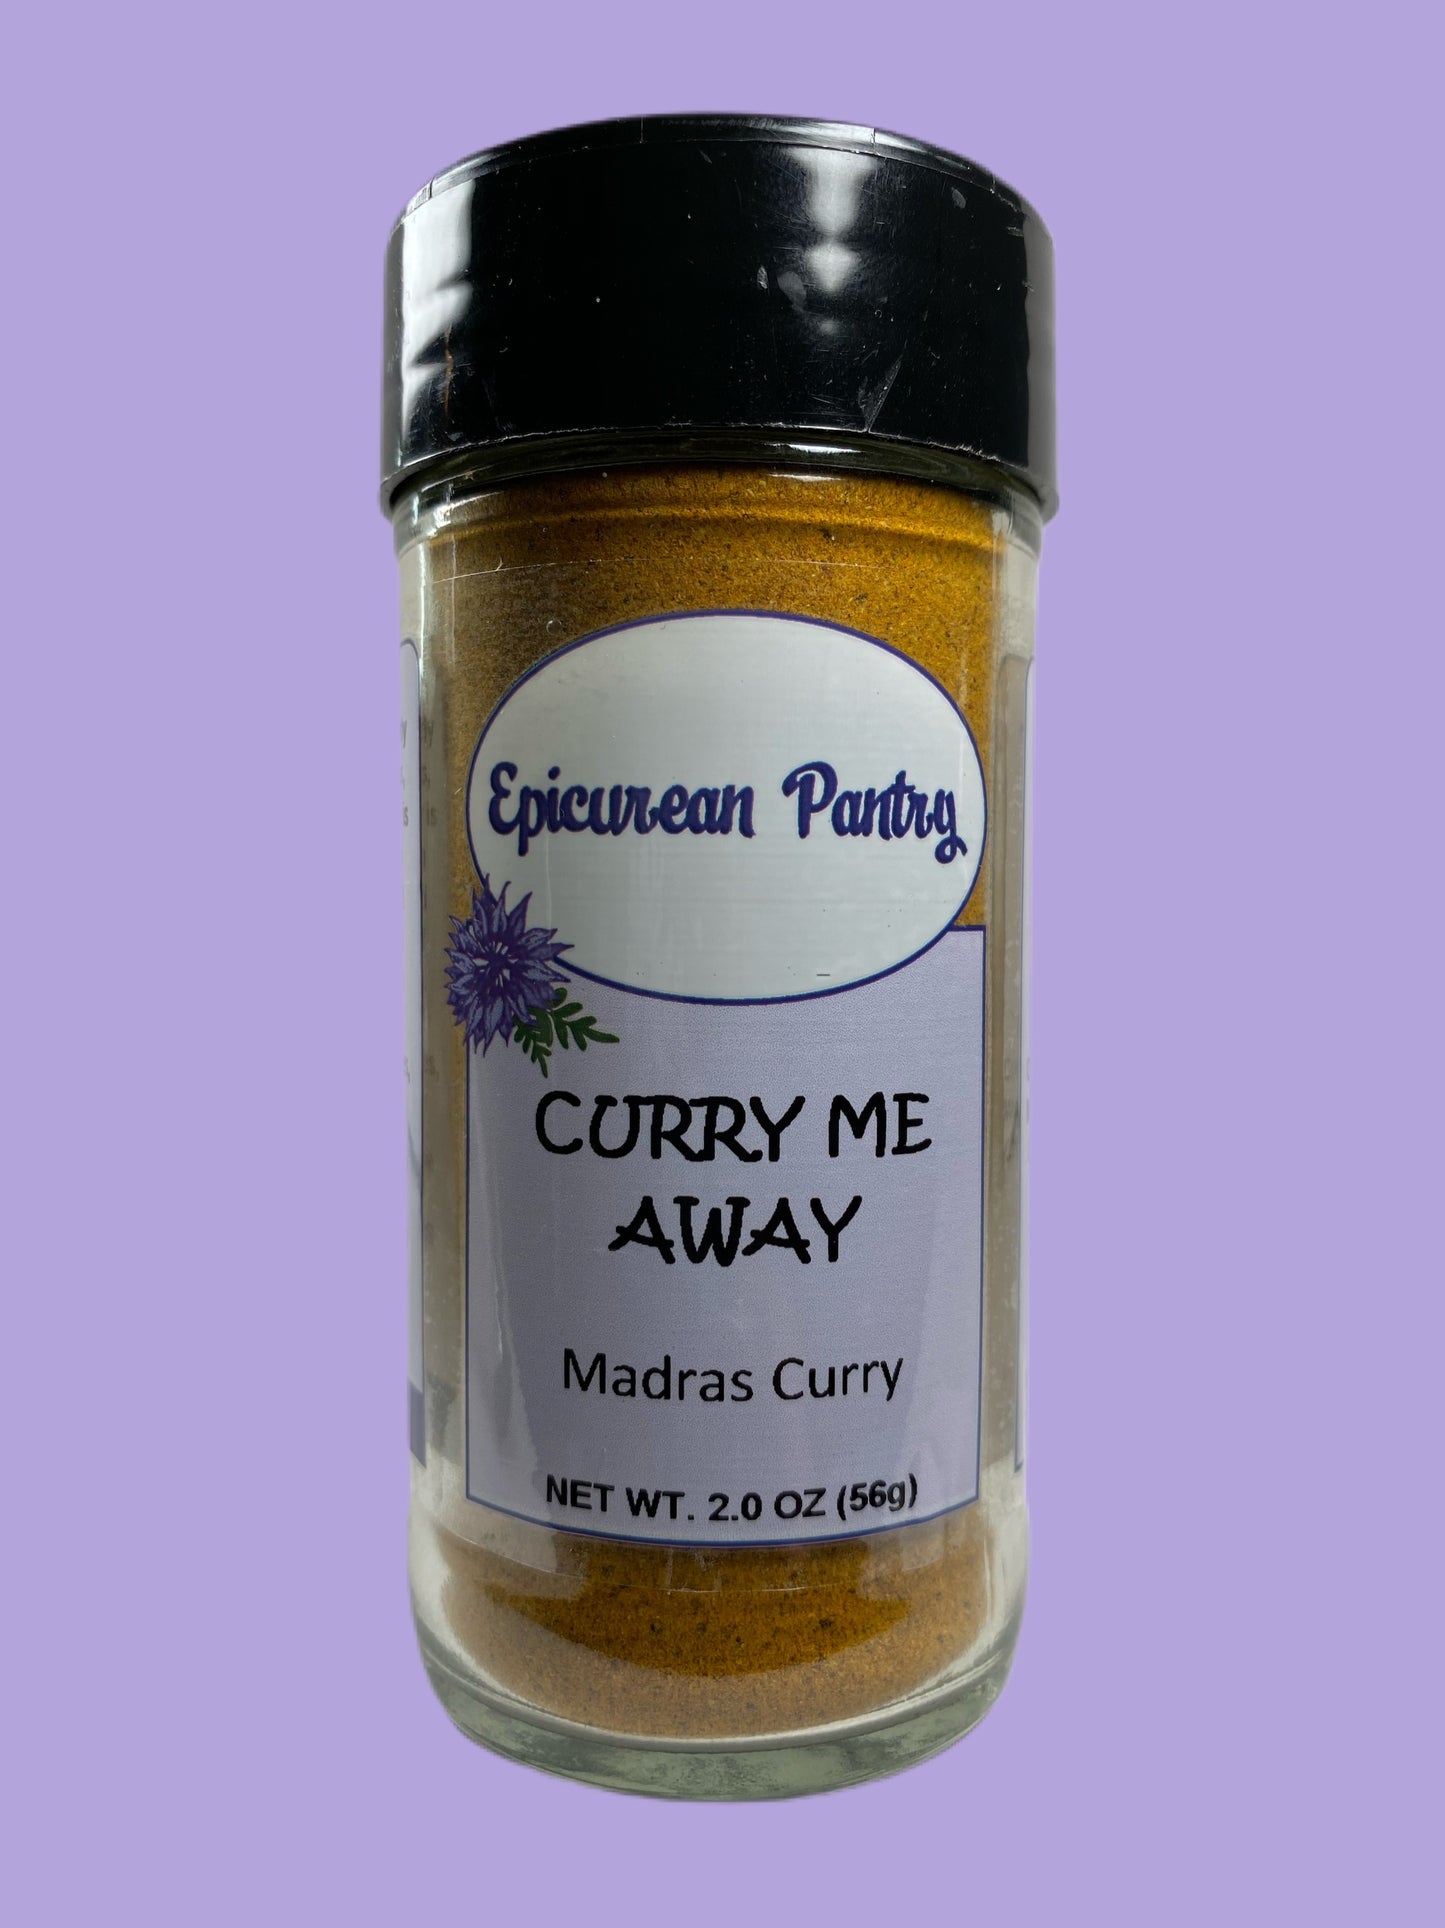 Curry Me Away - Madras Curry - 2.0 oz net wt